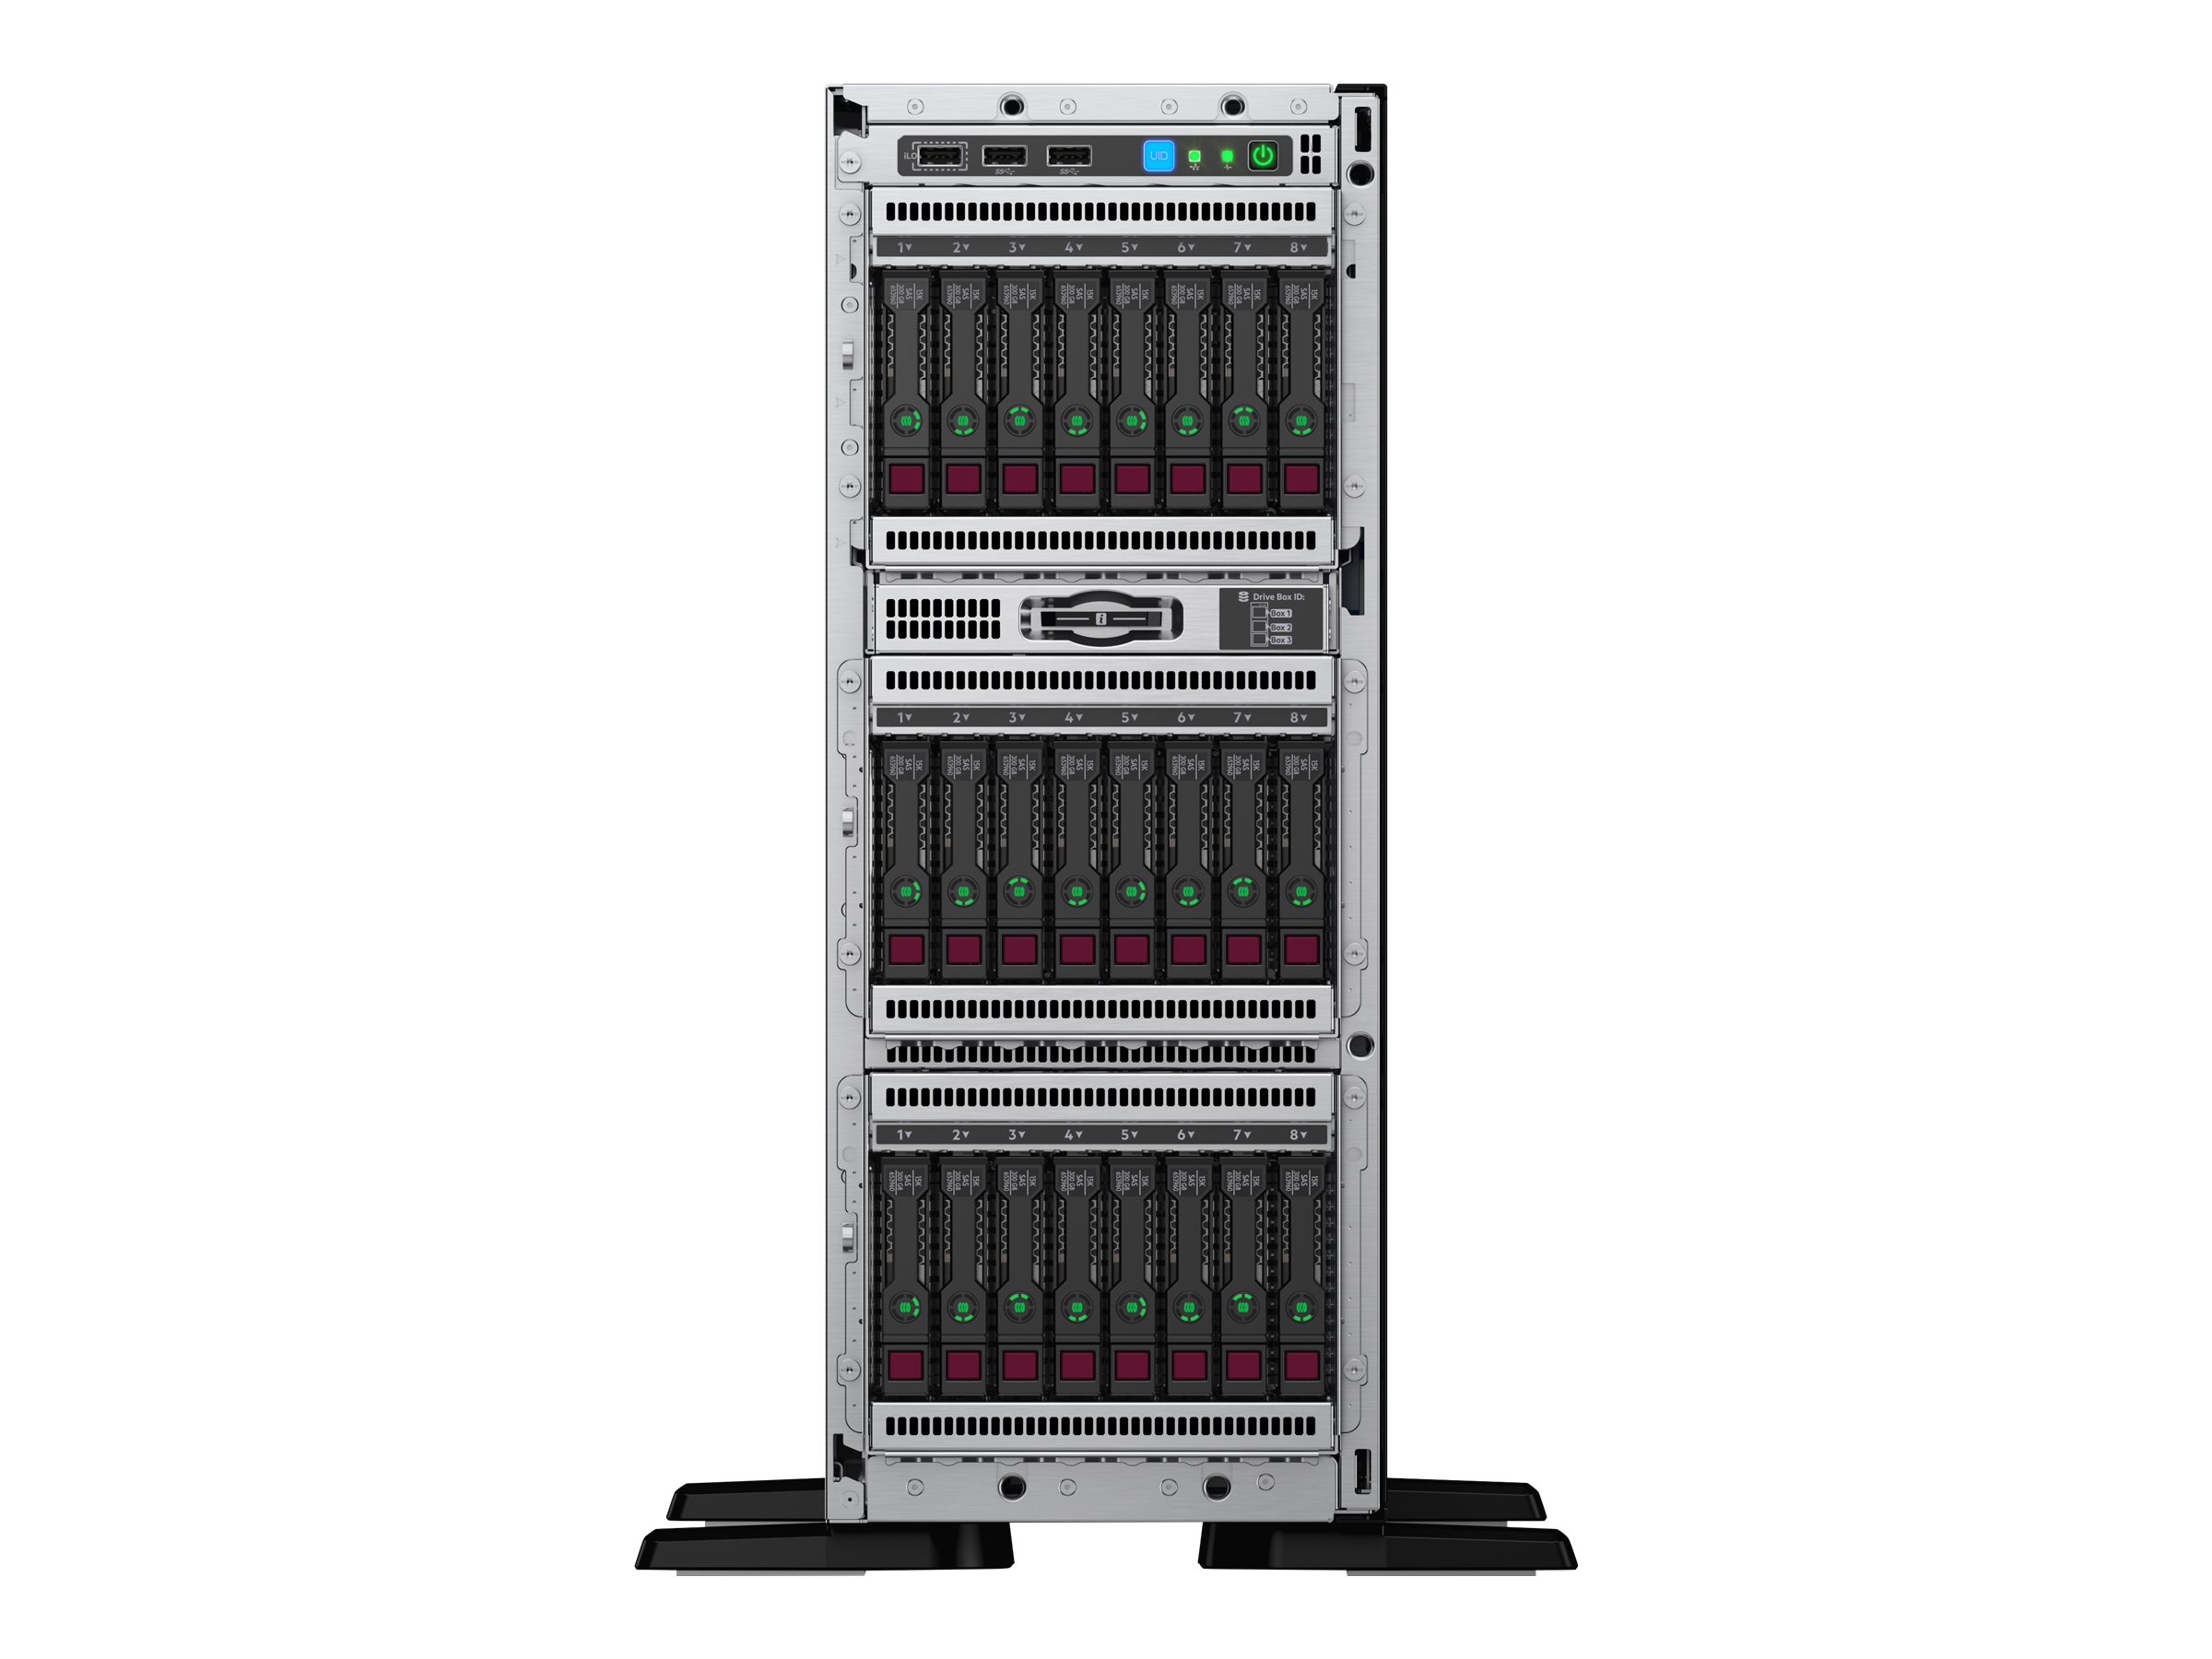 HPE ProLiant ML350 Gen10 Solution - Server - Tower - 4U - zweiweg - 1 x Xeon Silver 4110 / 2.1 GHz